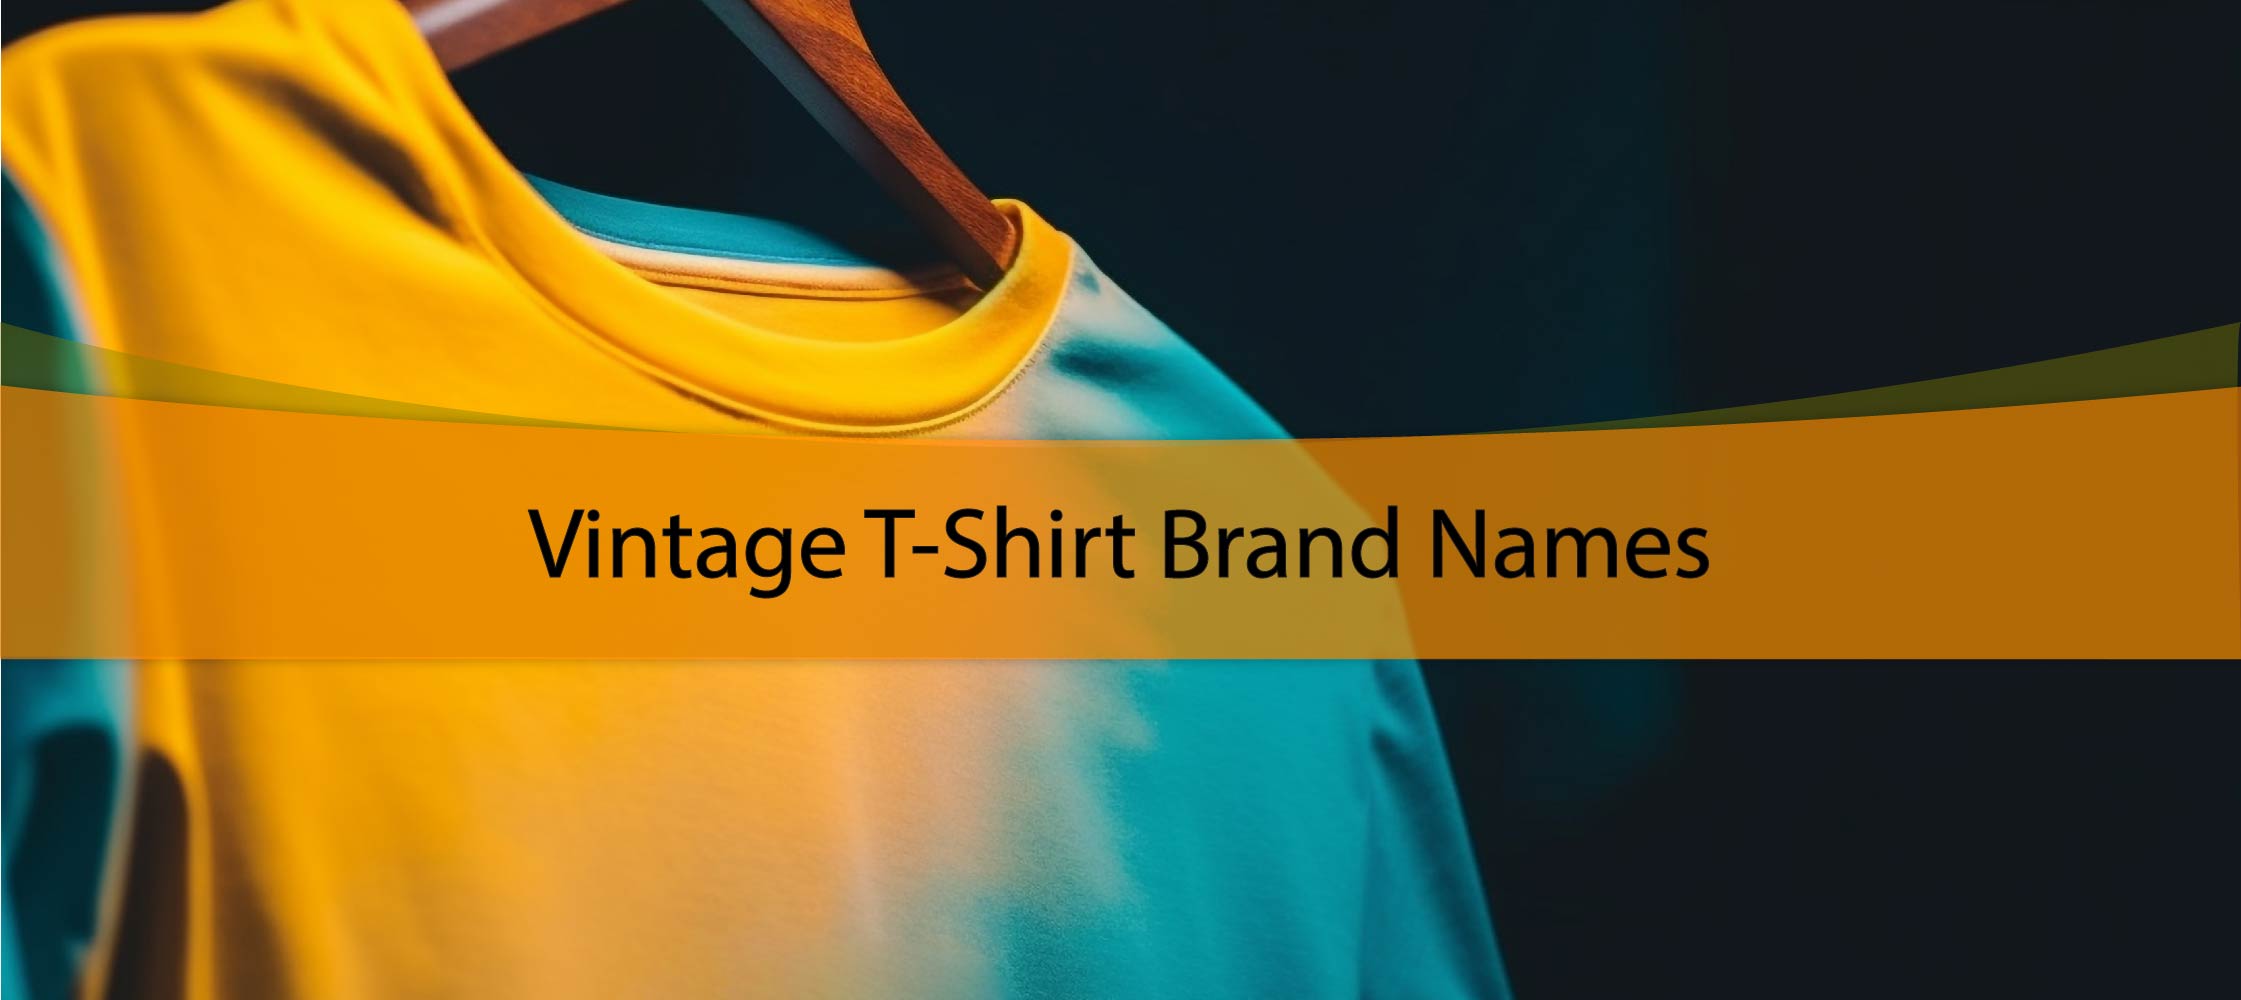 Vintage T-Shirt Brand Names